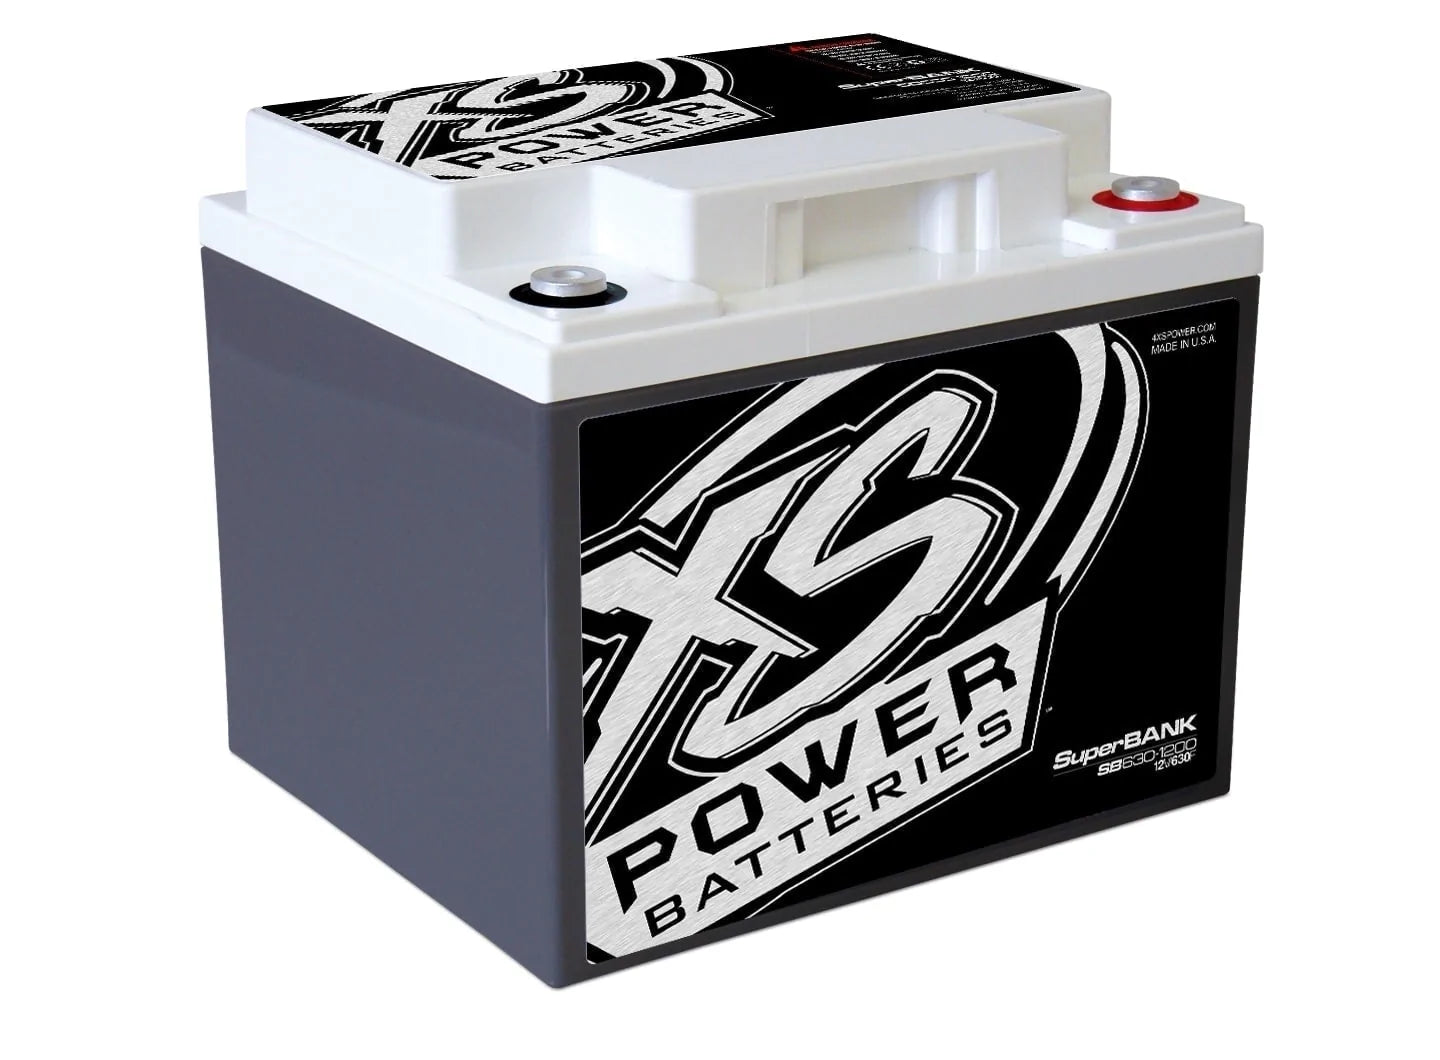 SB630-1200 XS Power 630F SuperBank 12V Ultracapacitors